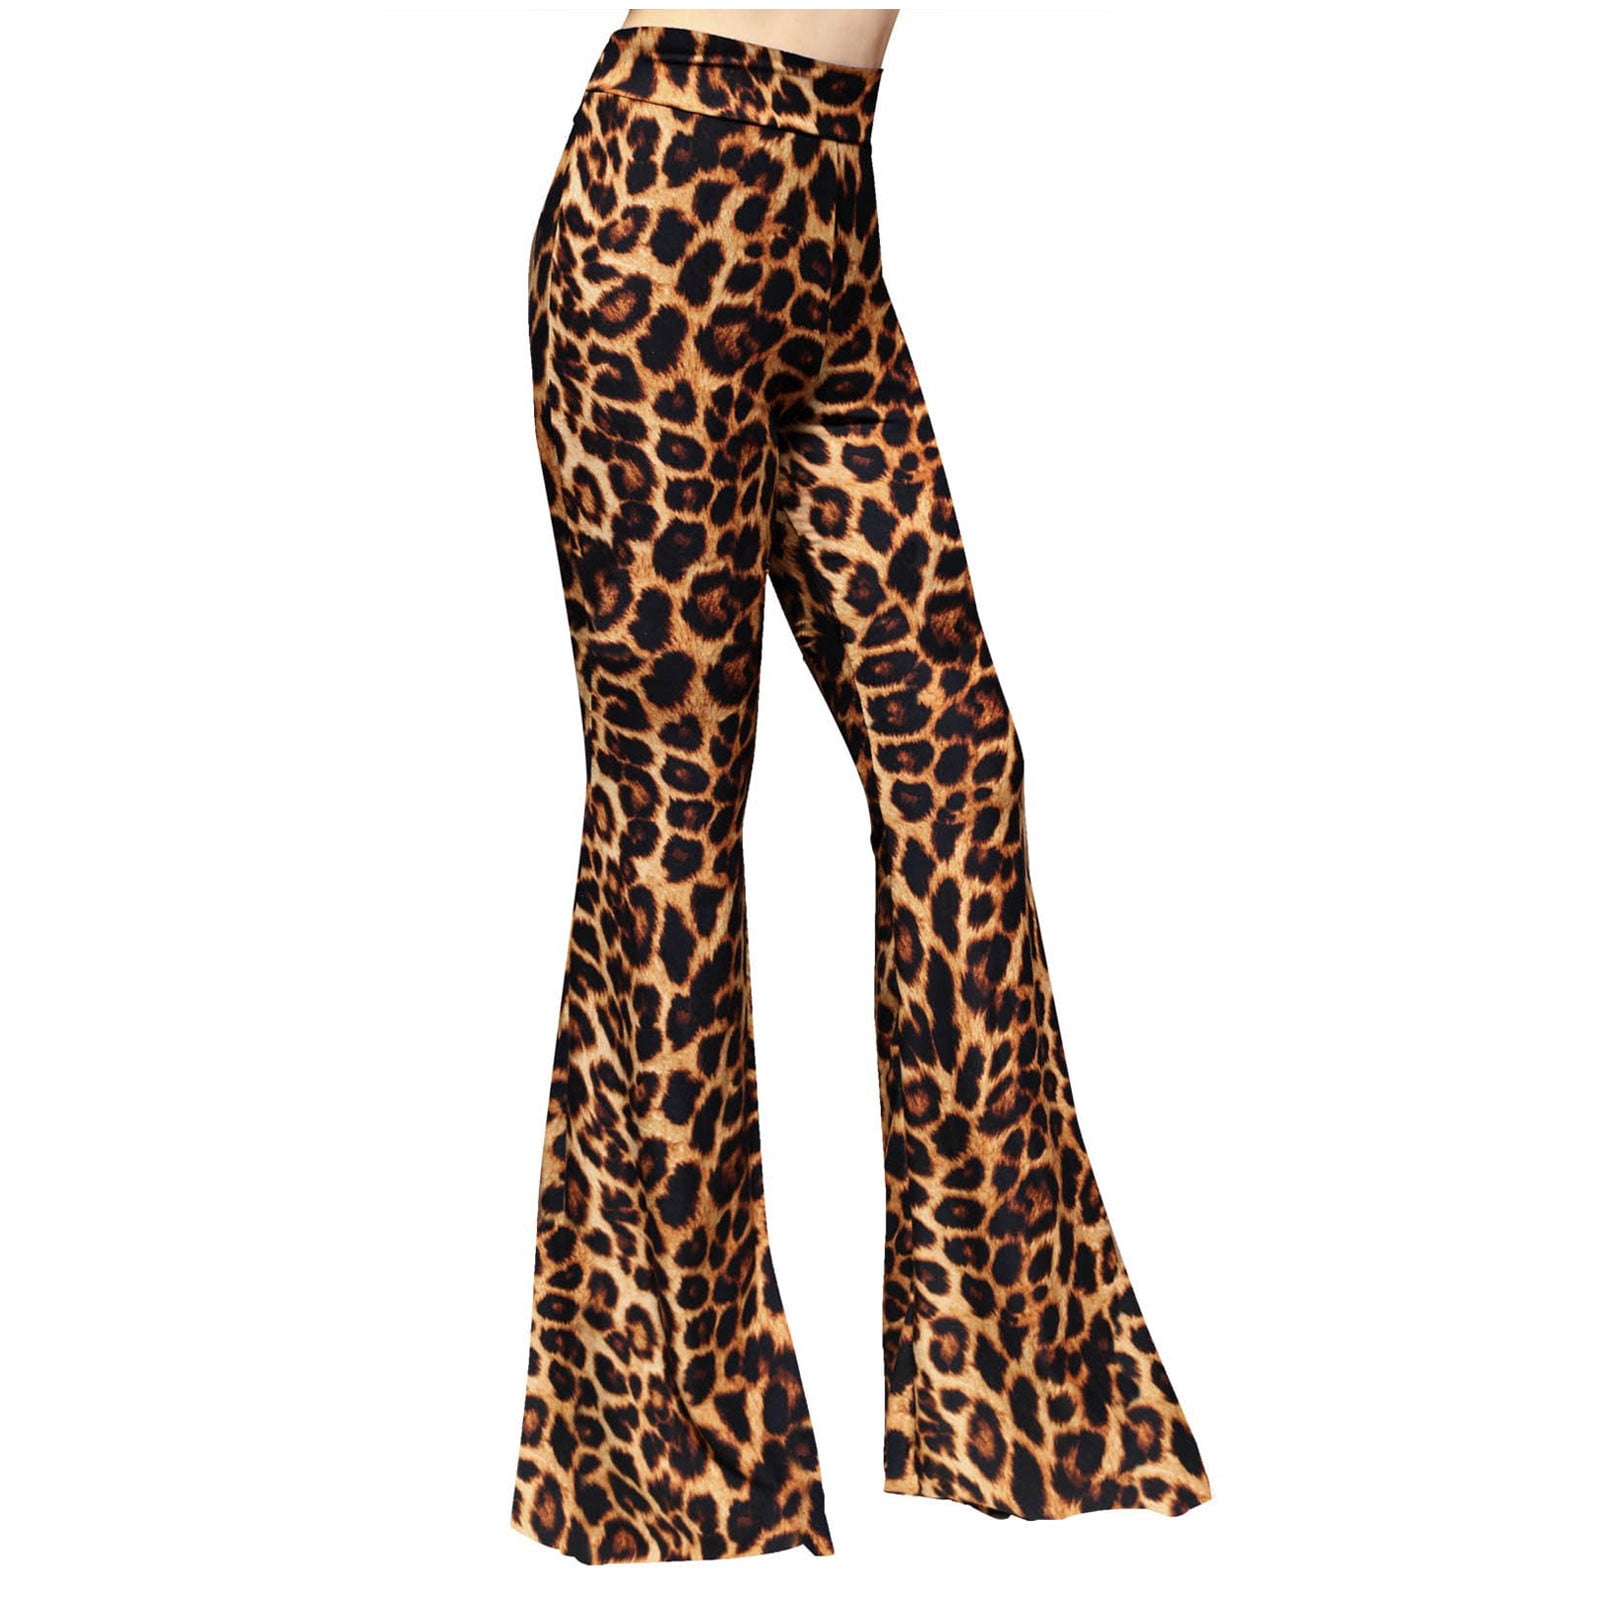 Dyegold Stretchy Flare Leggings for Women Vintage Leopard Print